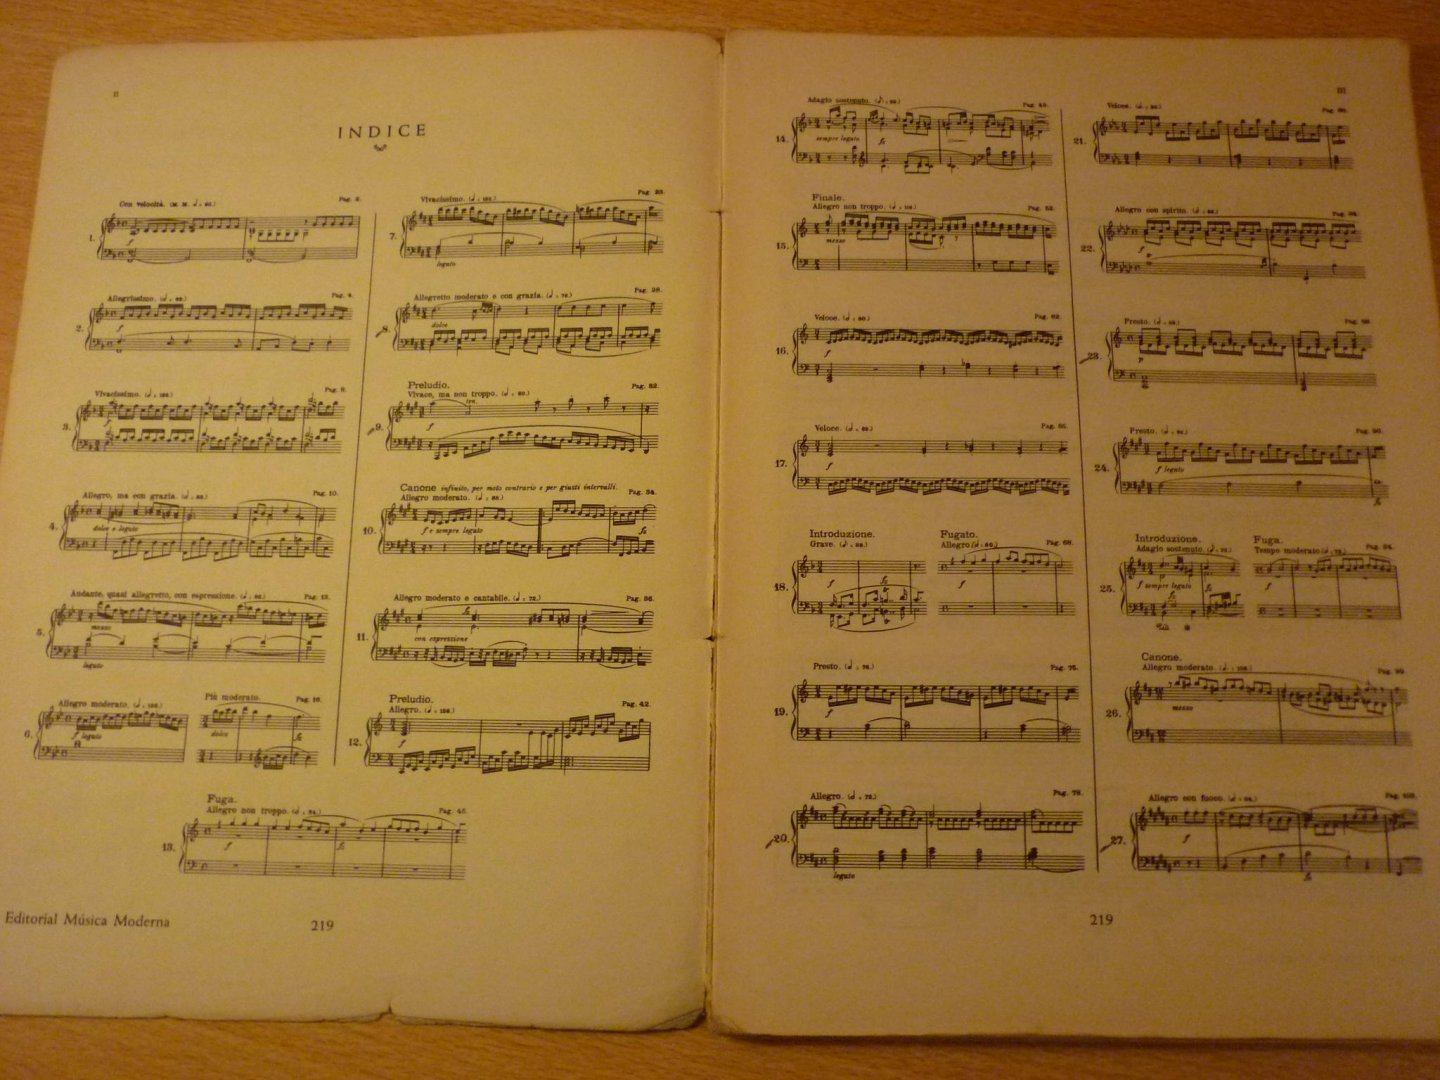 Clementi - Gradus ad Parnassum für Klavier - Vol. I